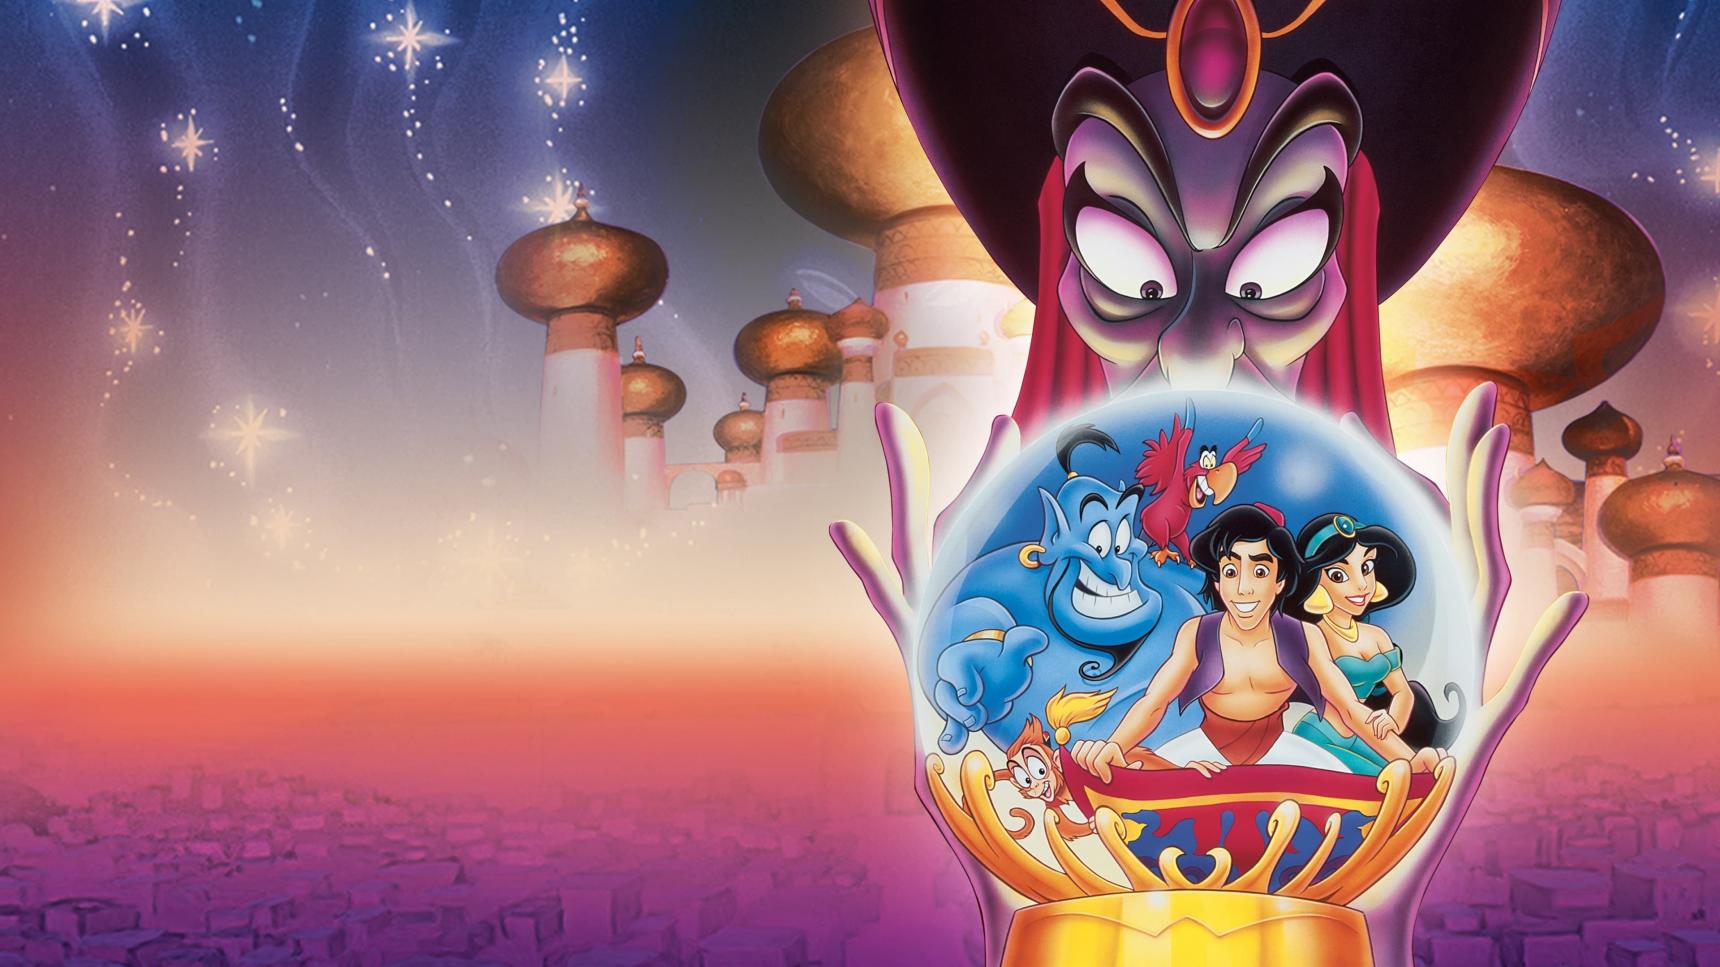 Fondo de pantalla de la película Aladdin 2: El retorno de Jafar en Cliver.tv gratis